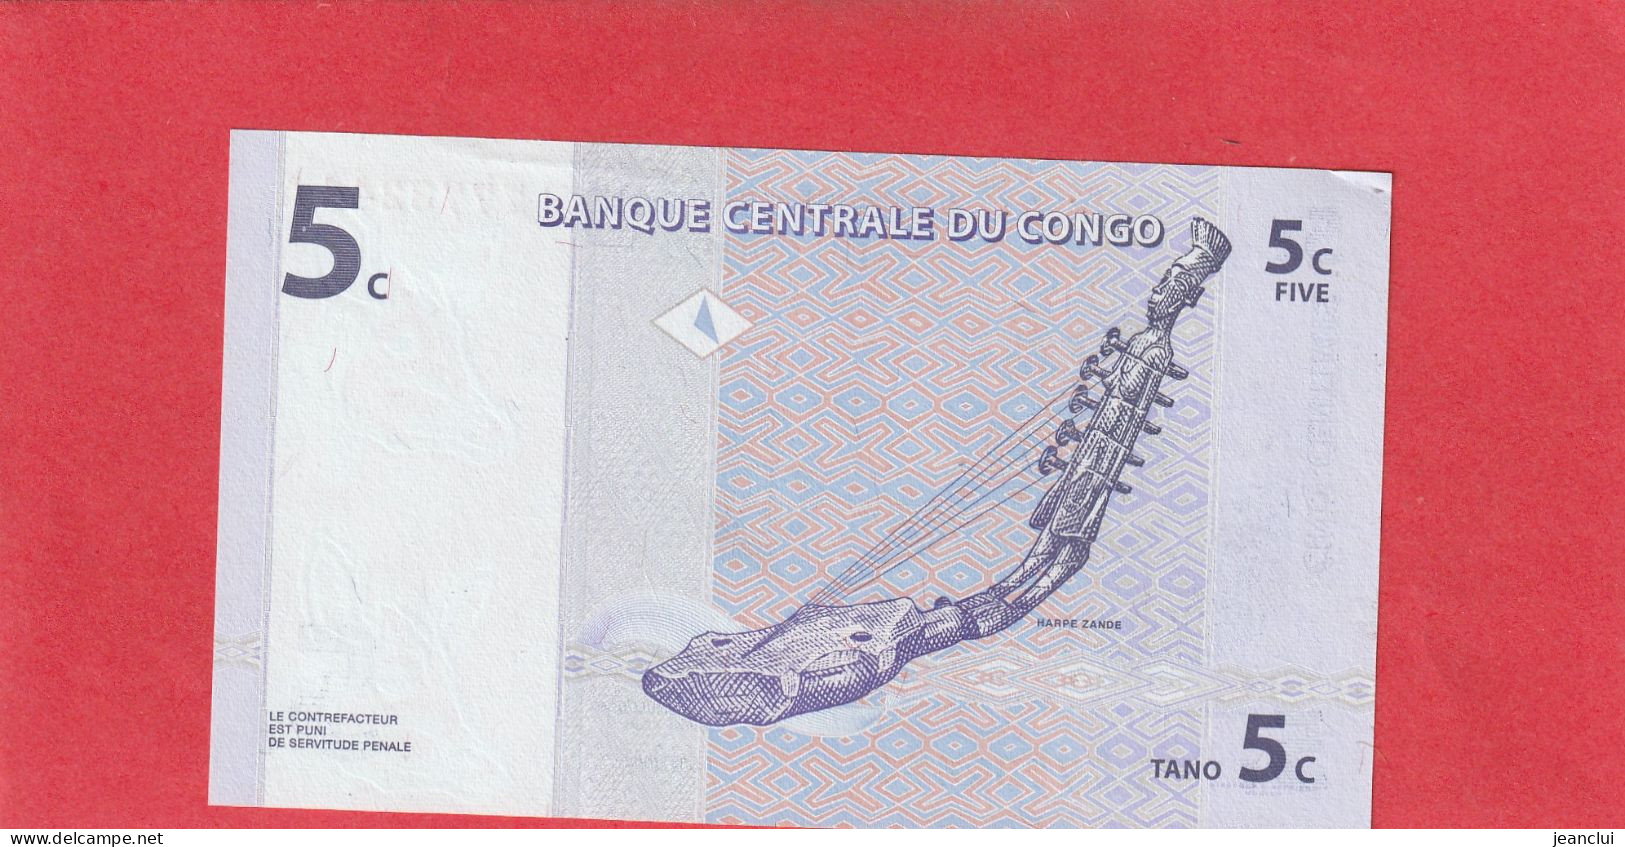 BANQUE CENTRALE DU CONGO  .  5 CENTIMES  .  01-11-1997  .  N°  B 7773244 A  .  BILLET EN TRES BEL ETAT  .  2 SCANNES - Demokratische Republik Kongo & Zaire